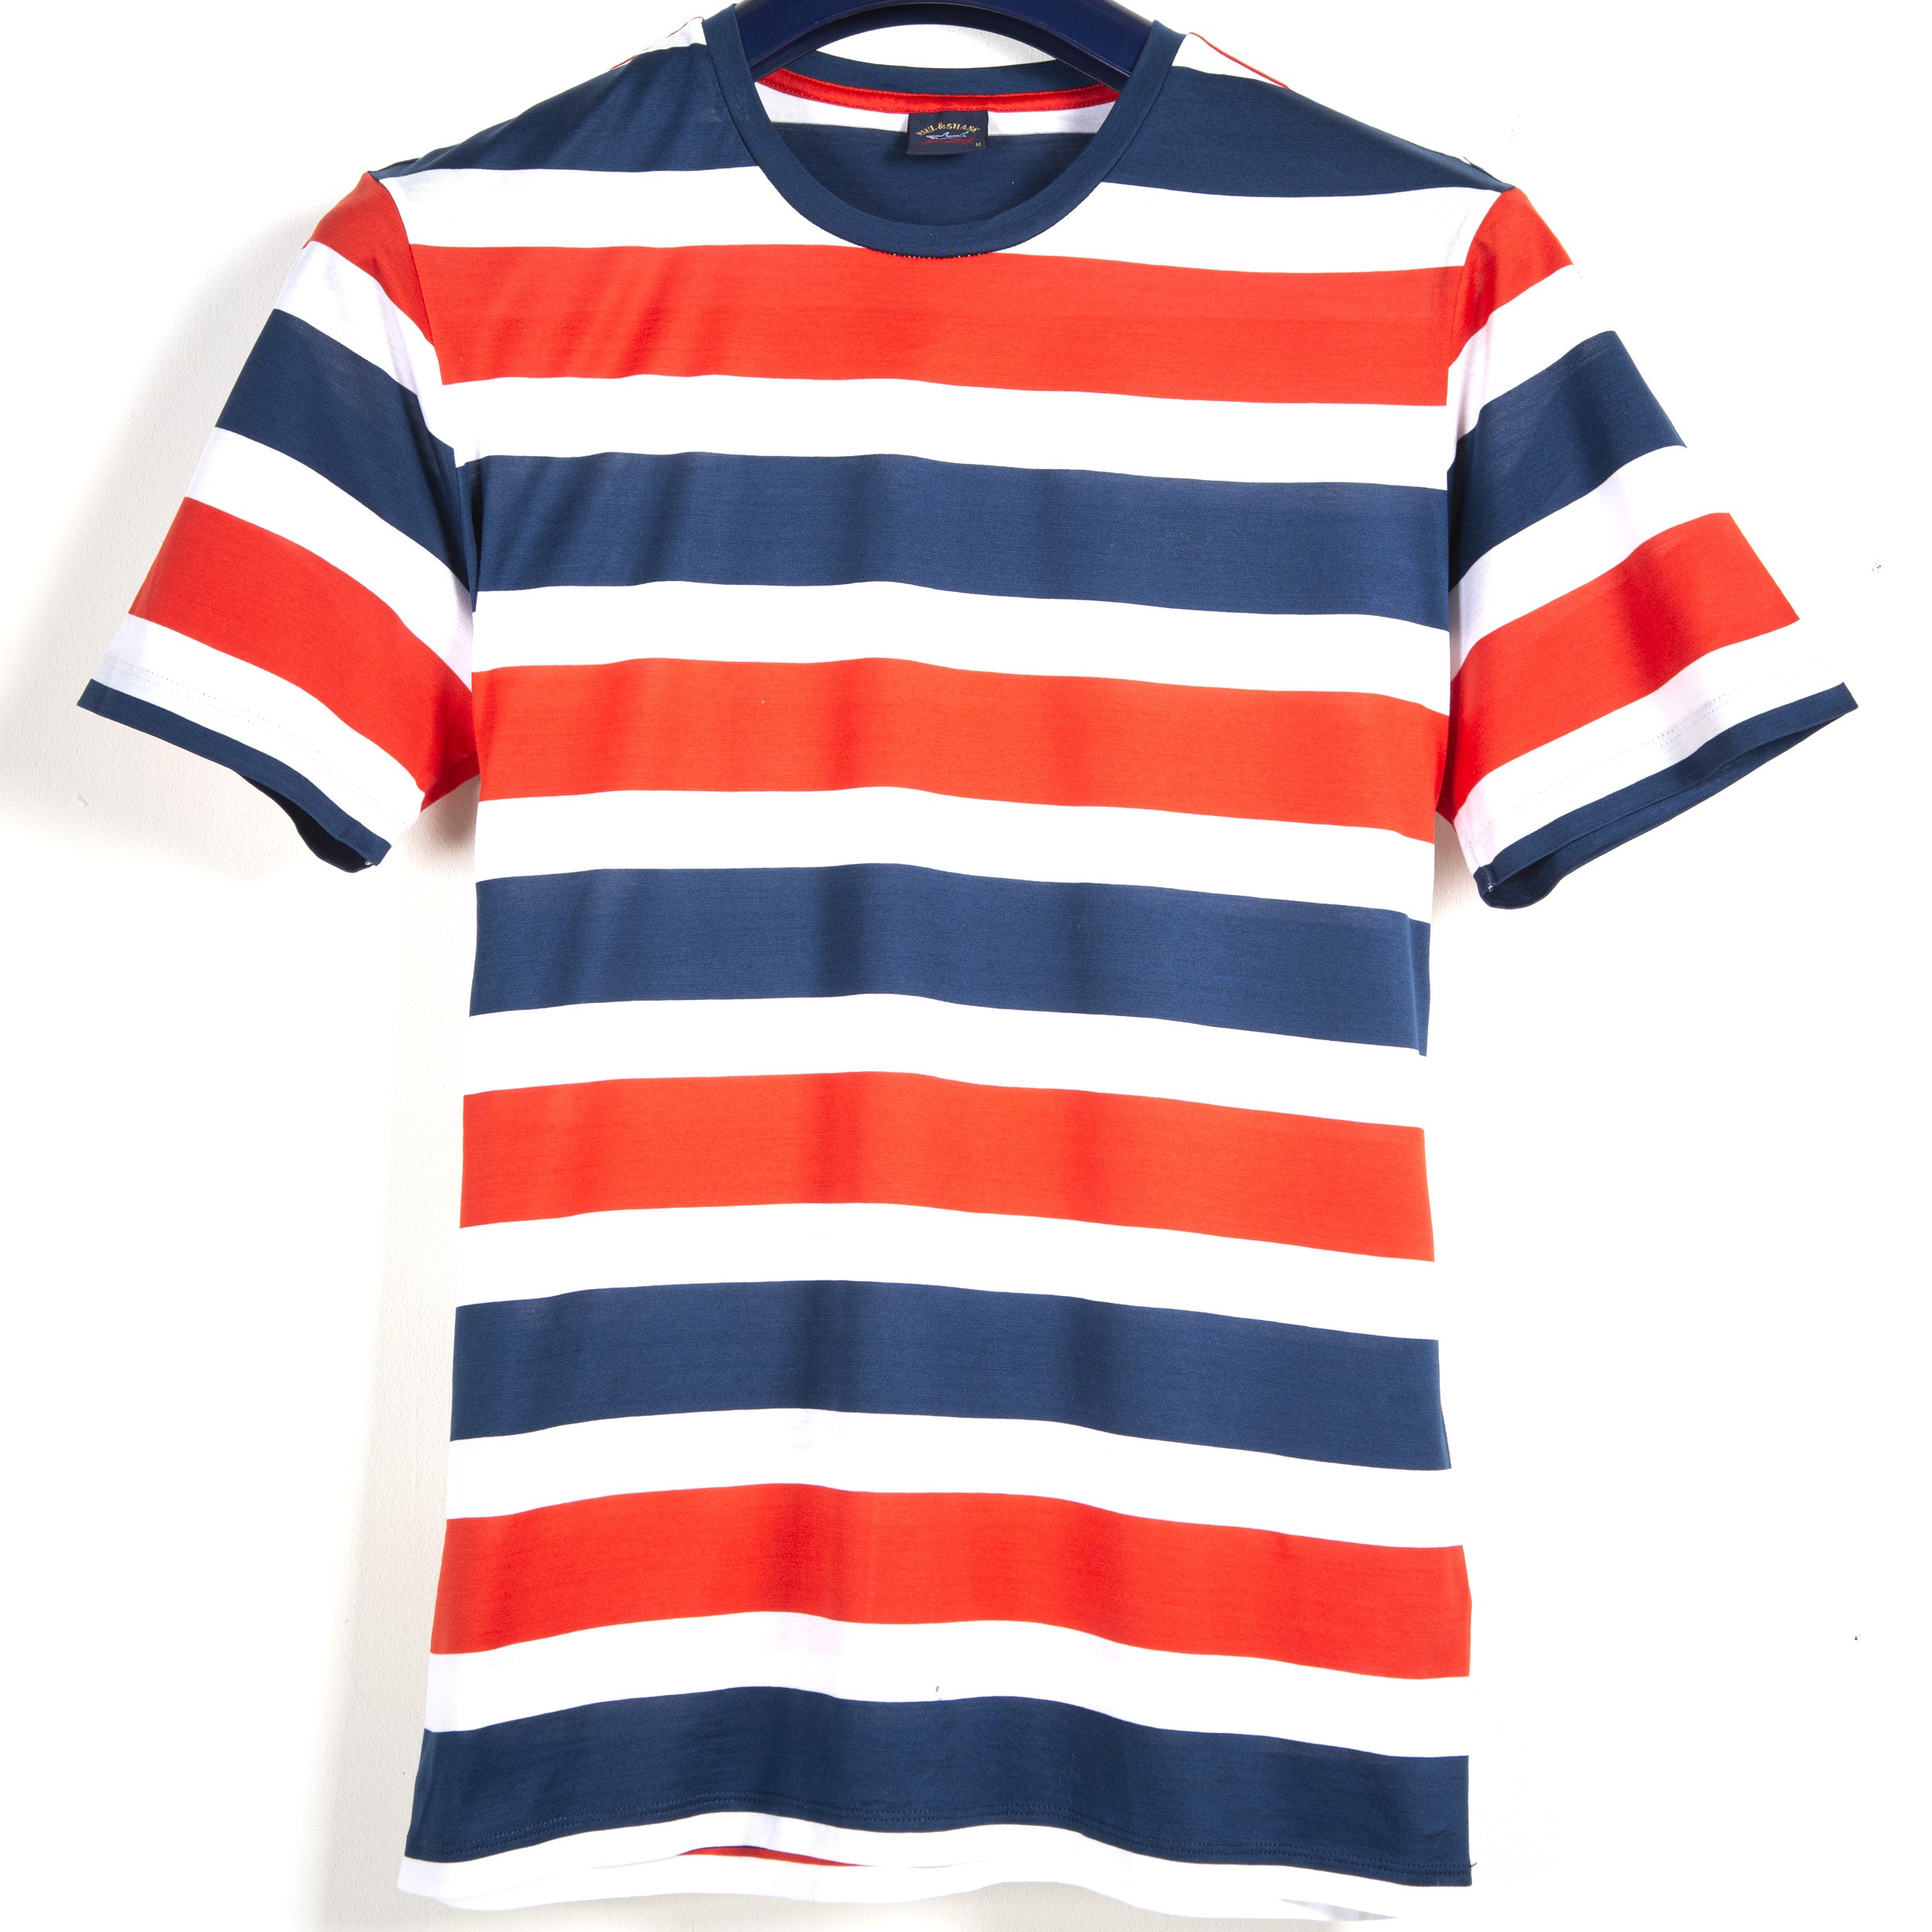 Paul & Shark 'Small logo' Striped T-shirt Red Whit Blue